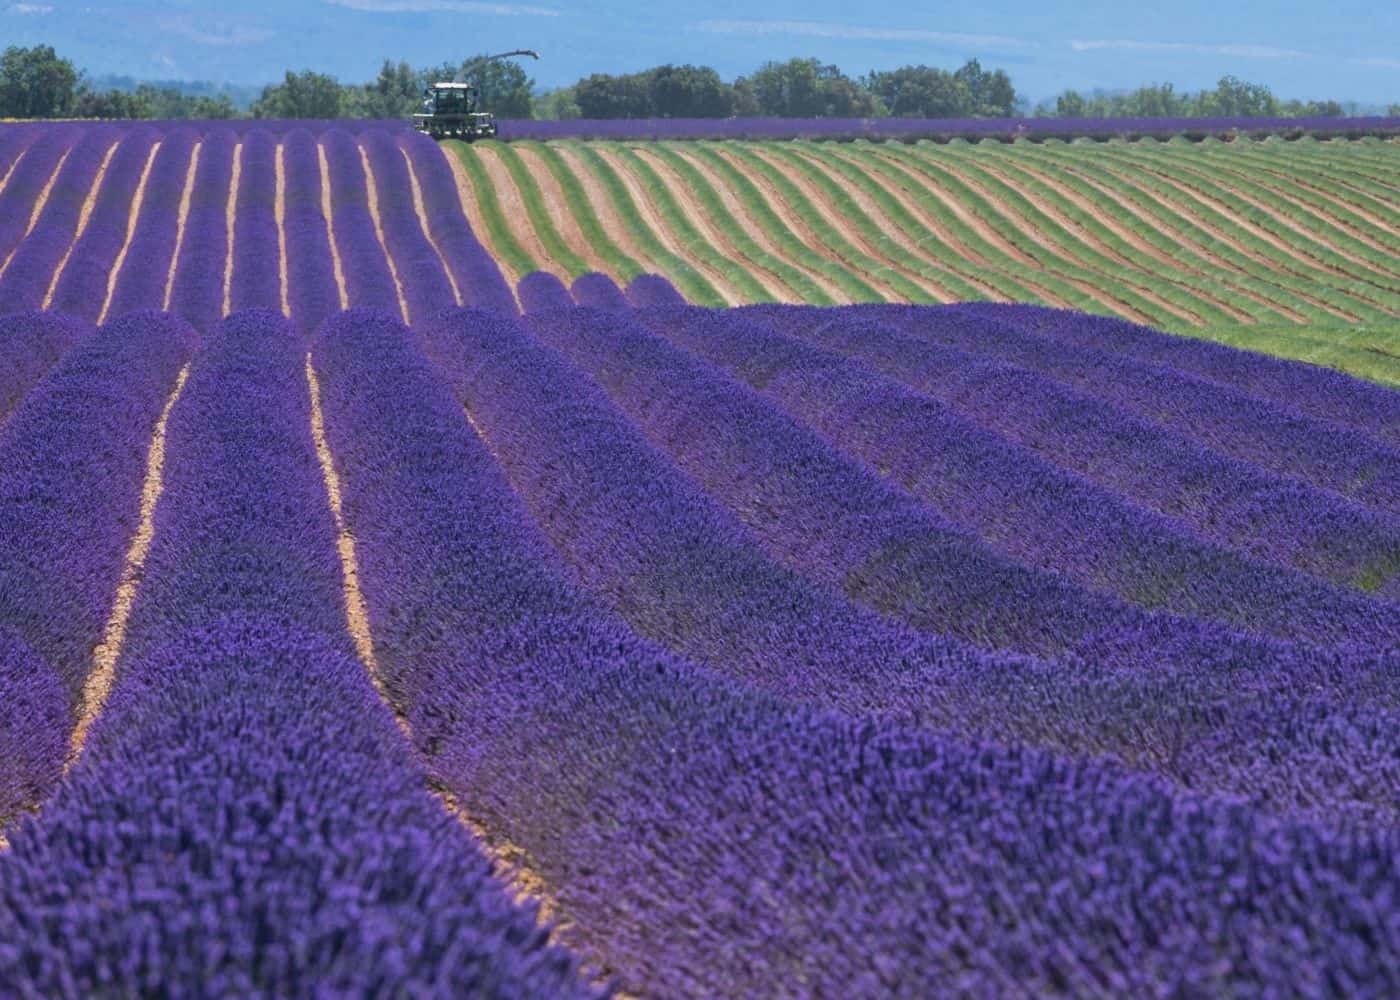 Lavandin field at Lavender Farm